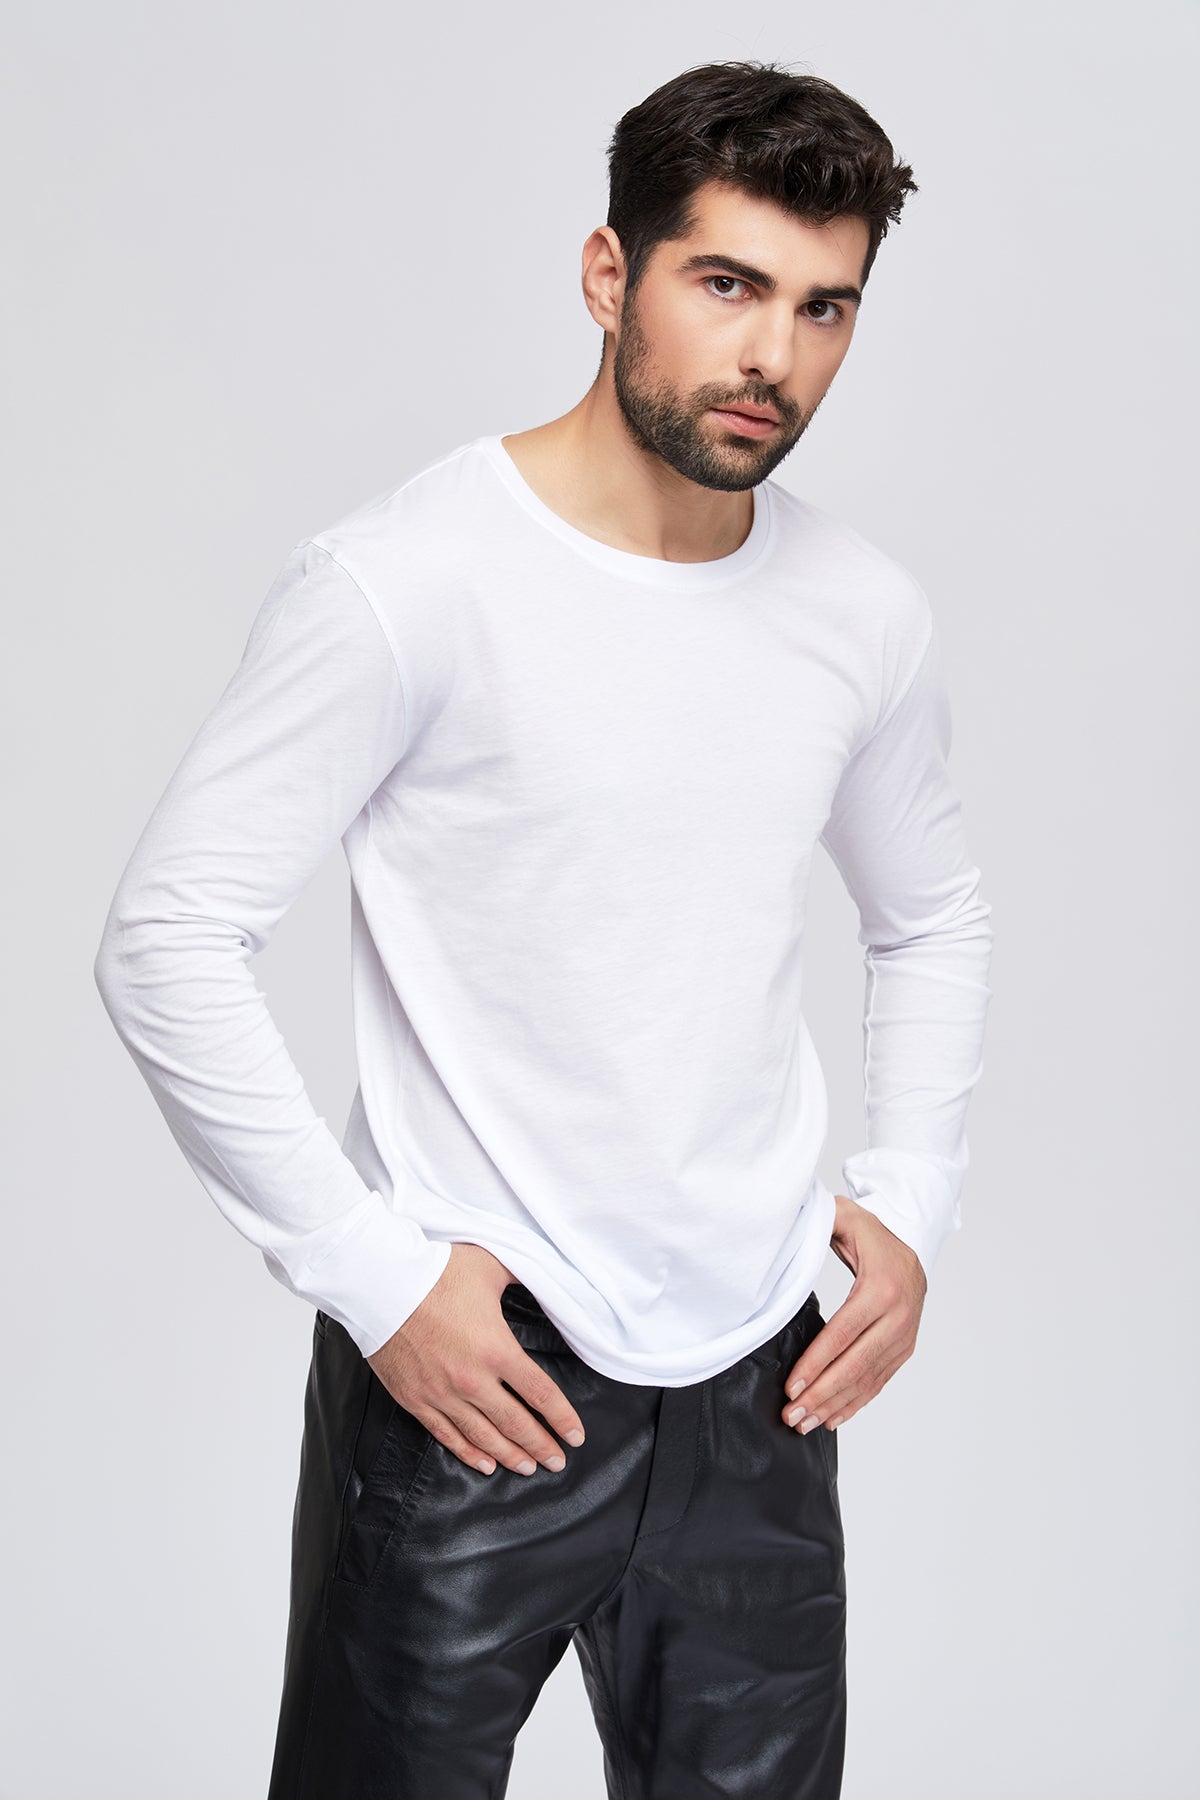 Men's long sleeve t-shirts 100 % great quality Turkish Pima cotton  preshrunk. Winter, cold weather essentials. Preshrunk.